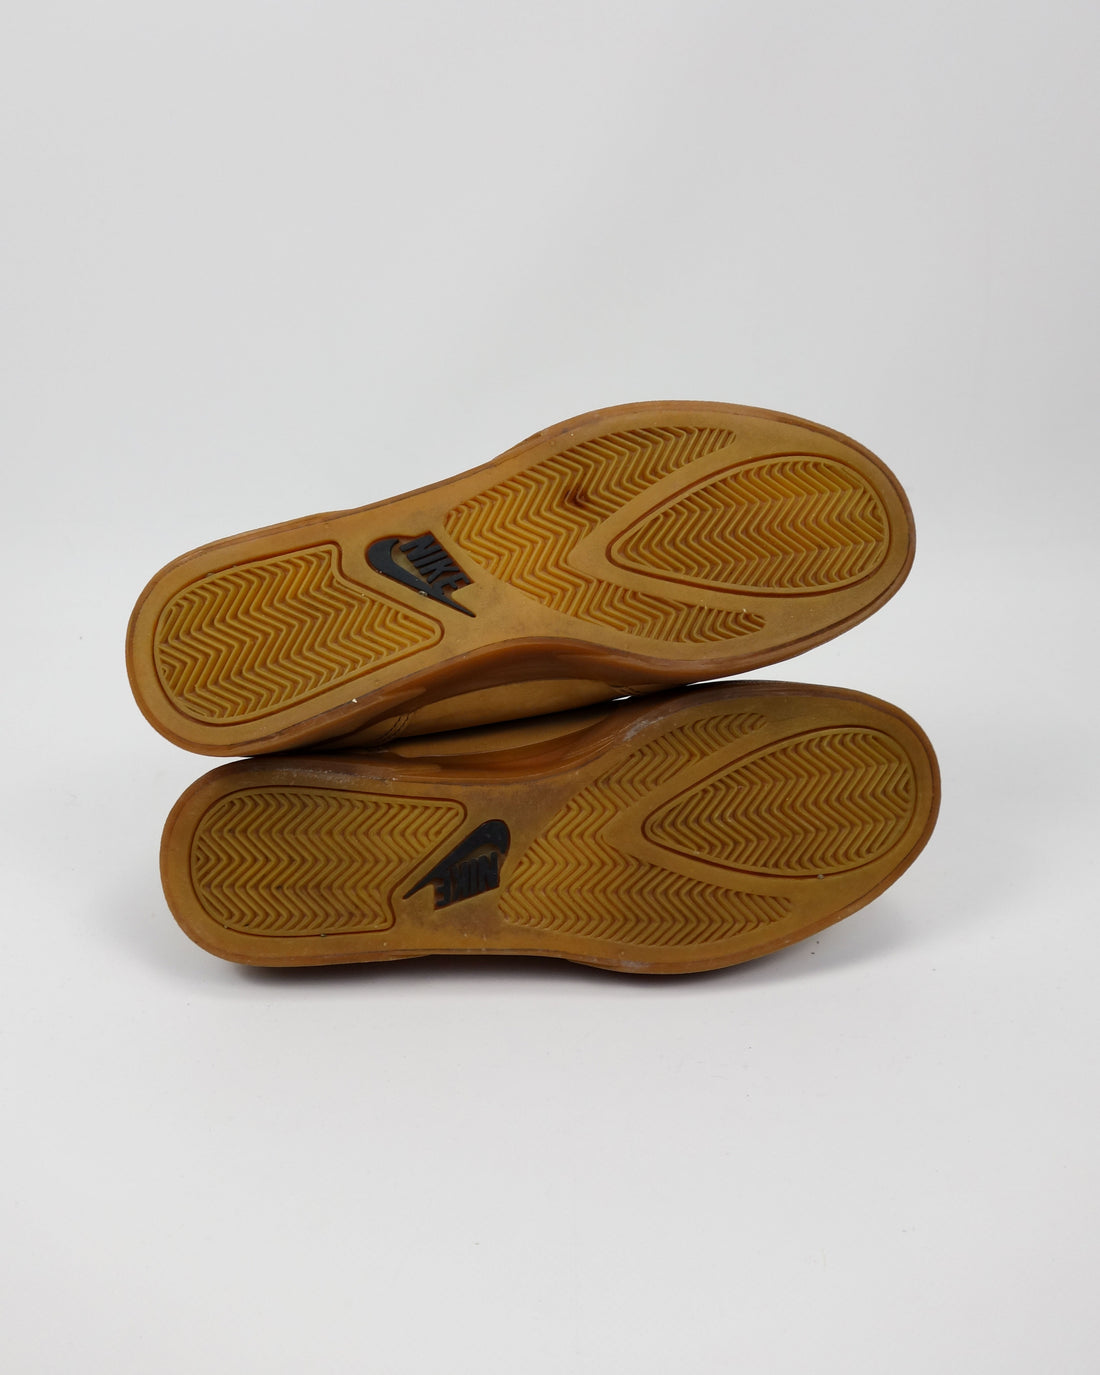 Nike GTS "WOOD" Brown Shoes 1995